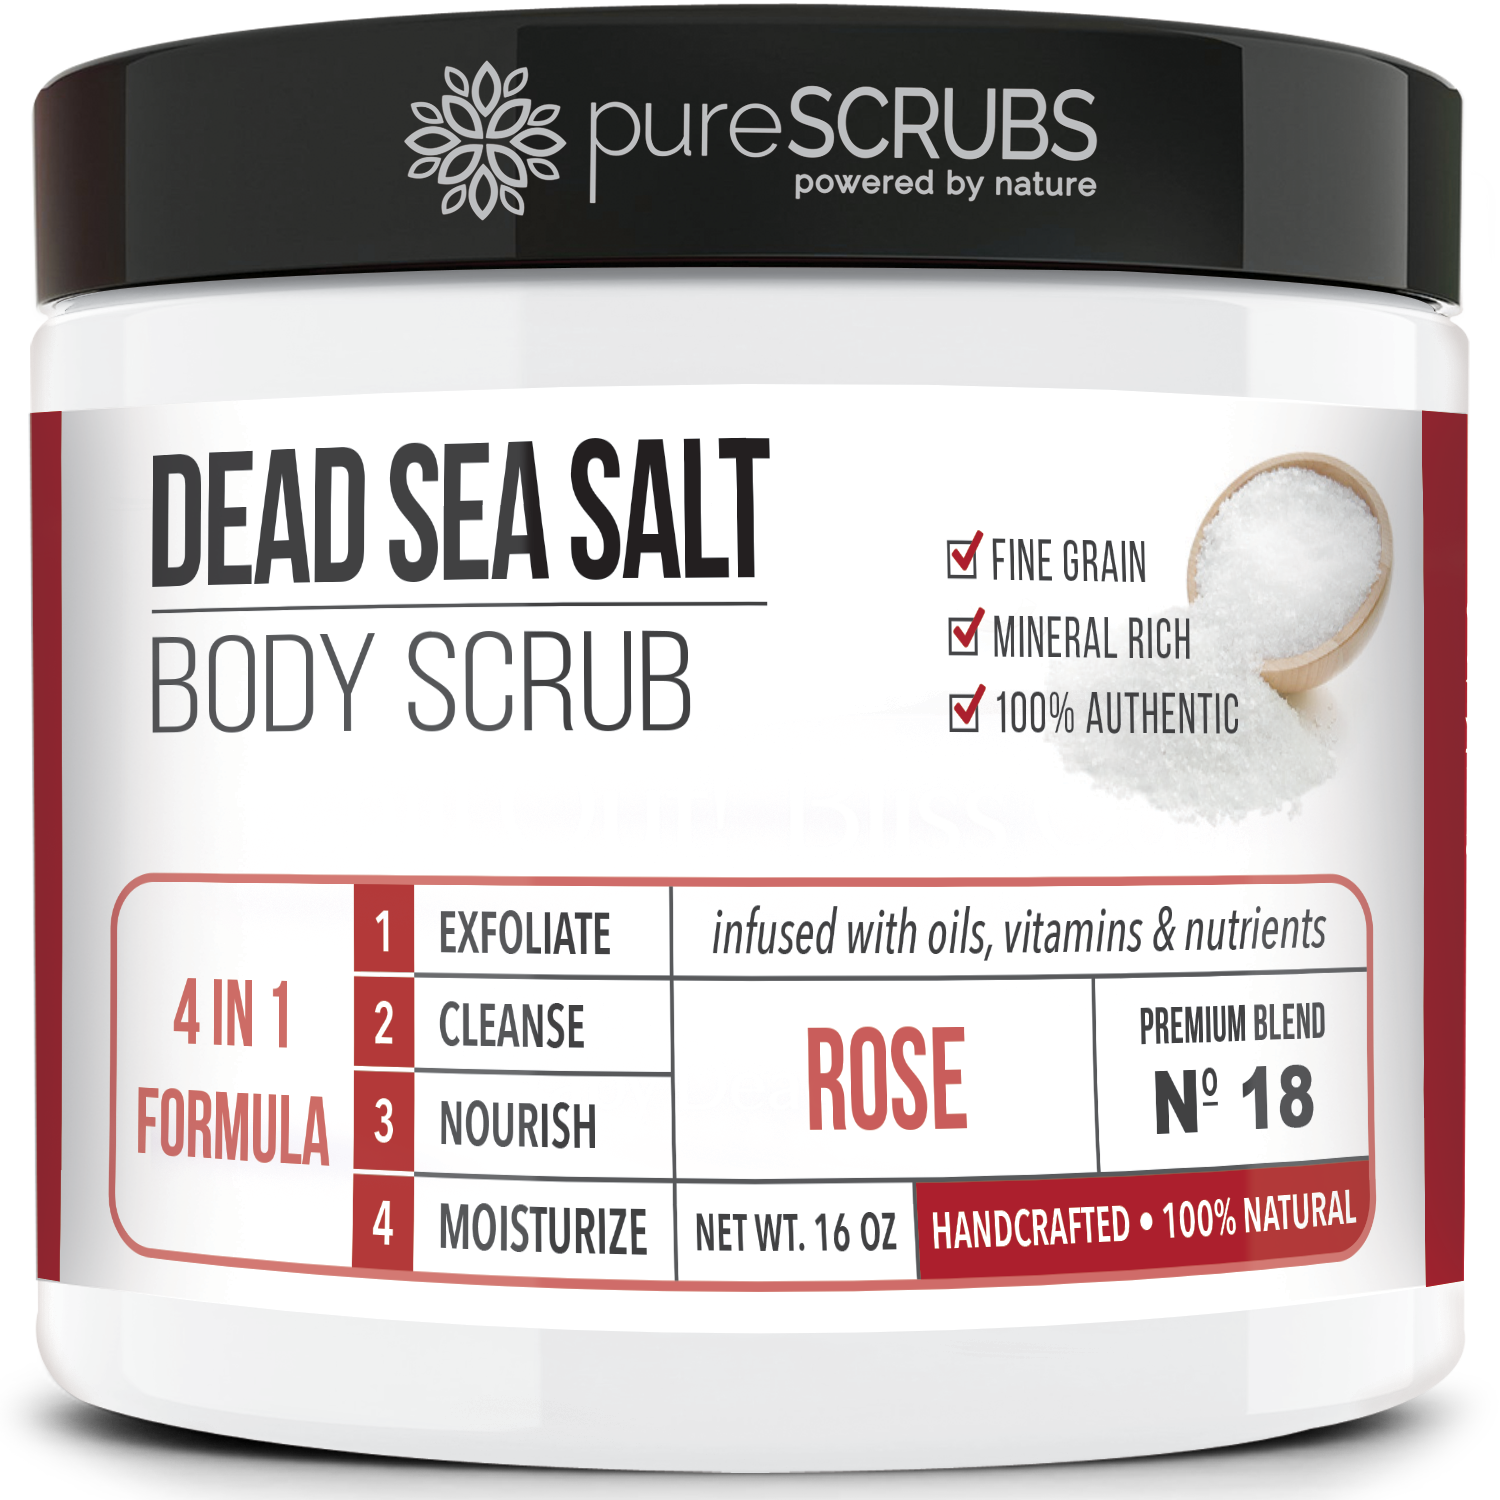 Rose Body Scrub / Dead Sea Salt / Premium Blend #18